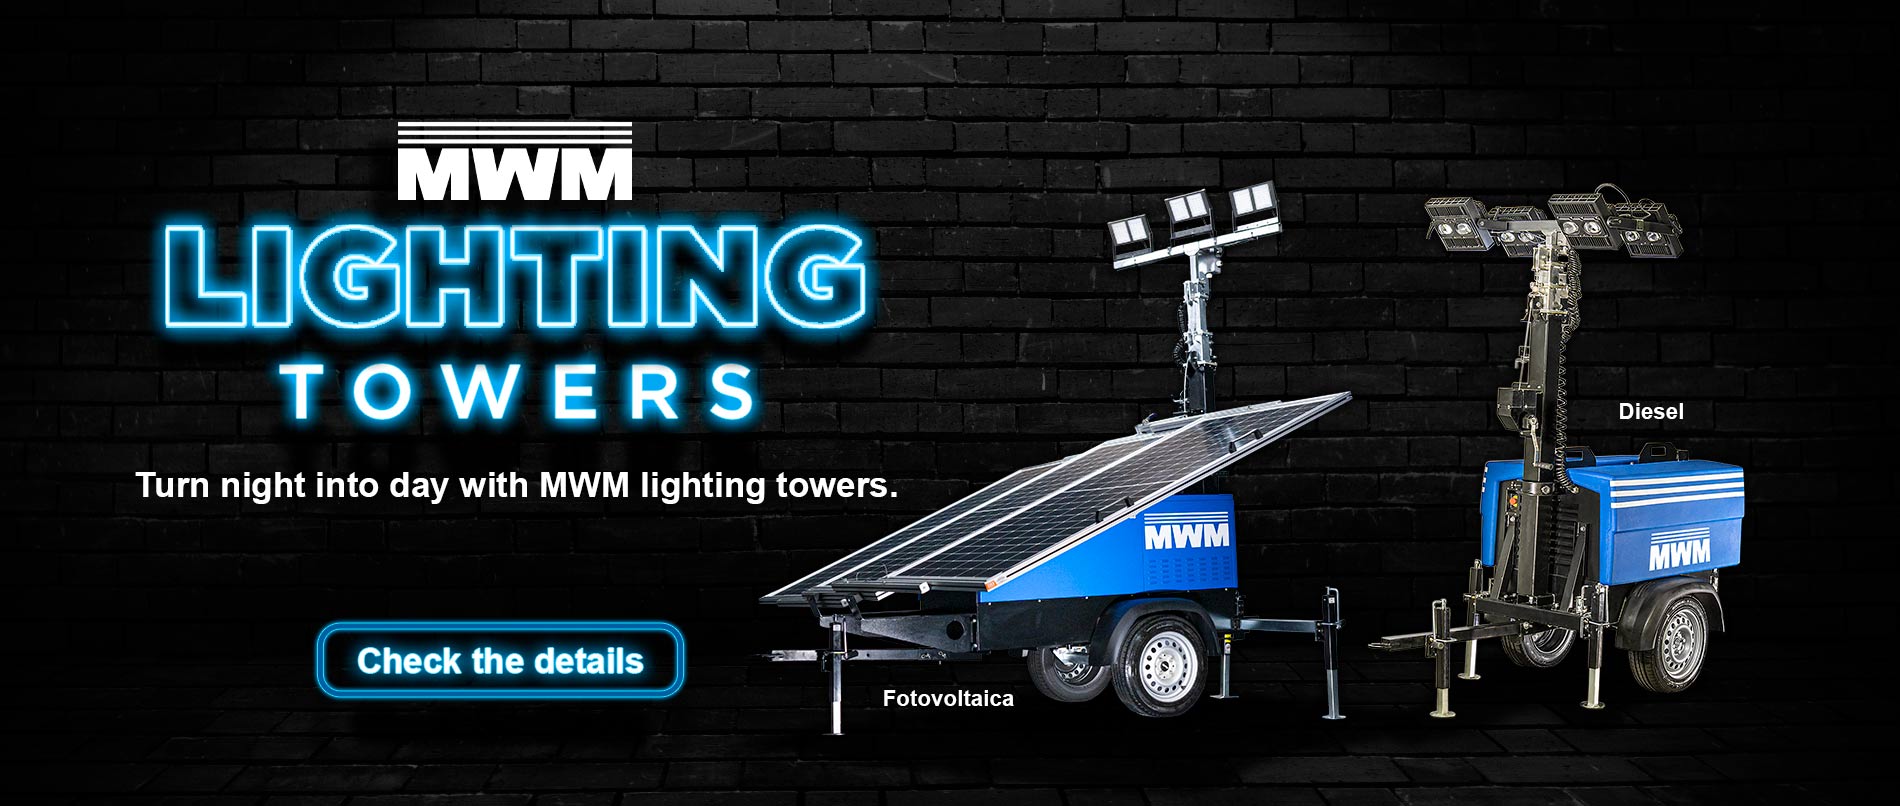 MWM Lighting Towers